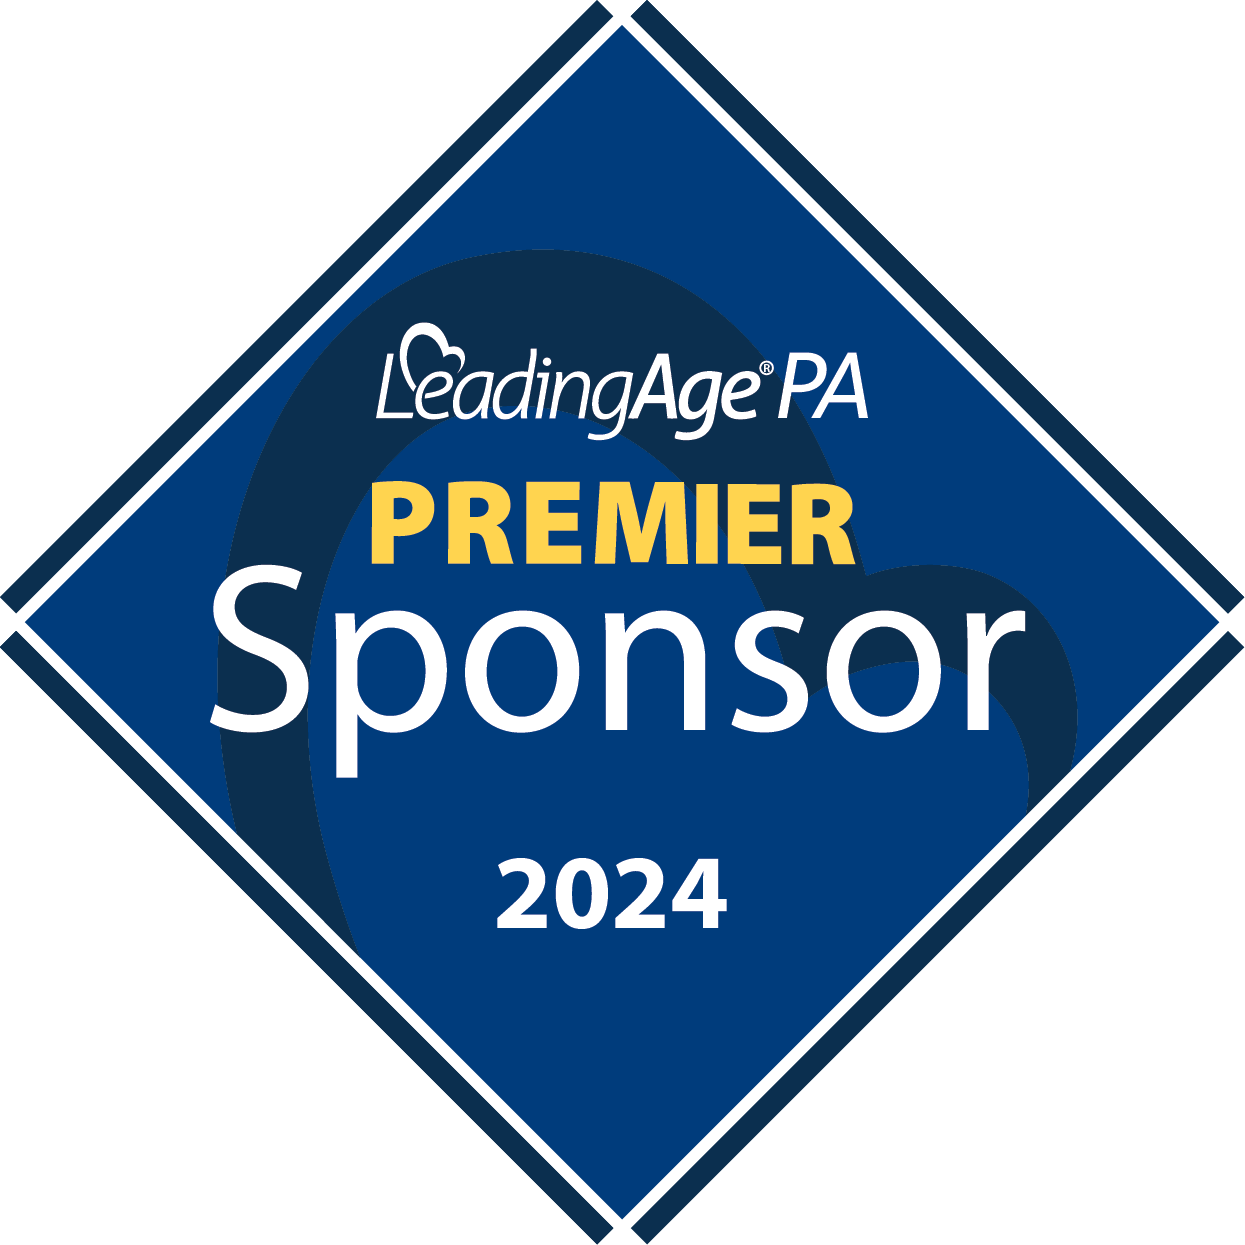 Leading Age PA Premier Sponsor 2024